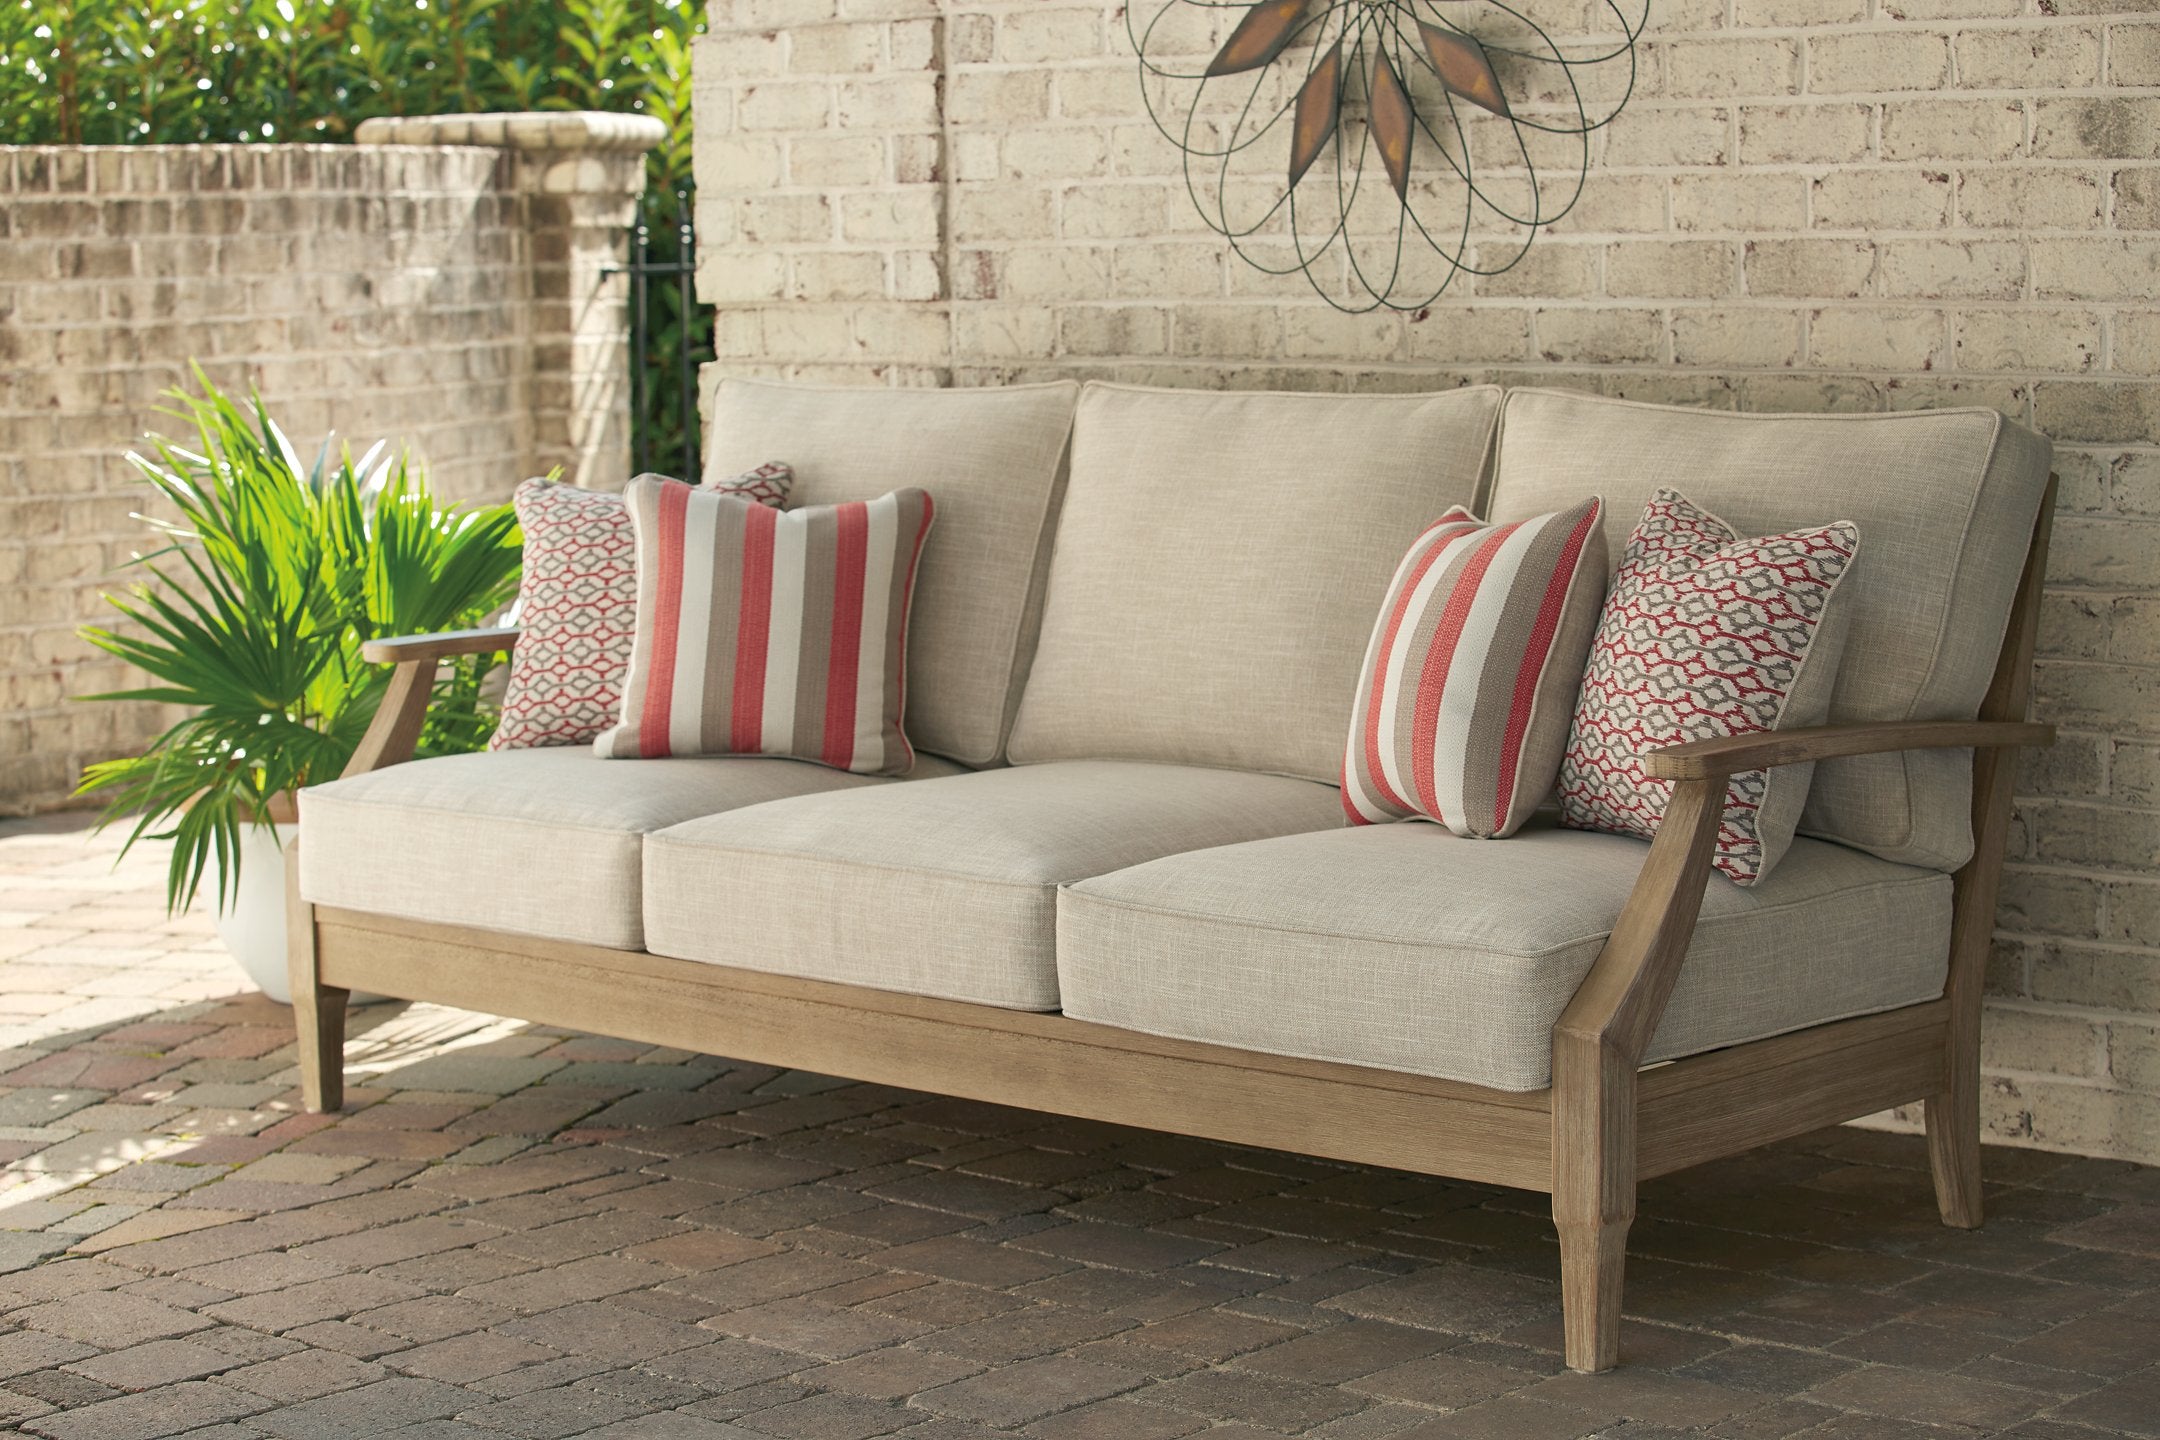 Clare View Sofa with Cushion - Romeo & Juliet Furniture (Warren,MI)